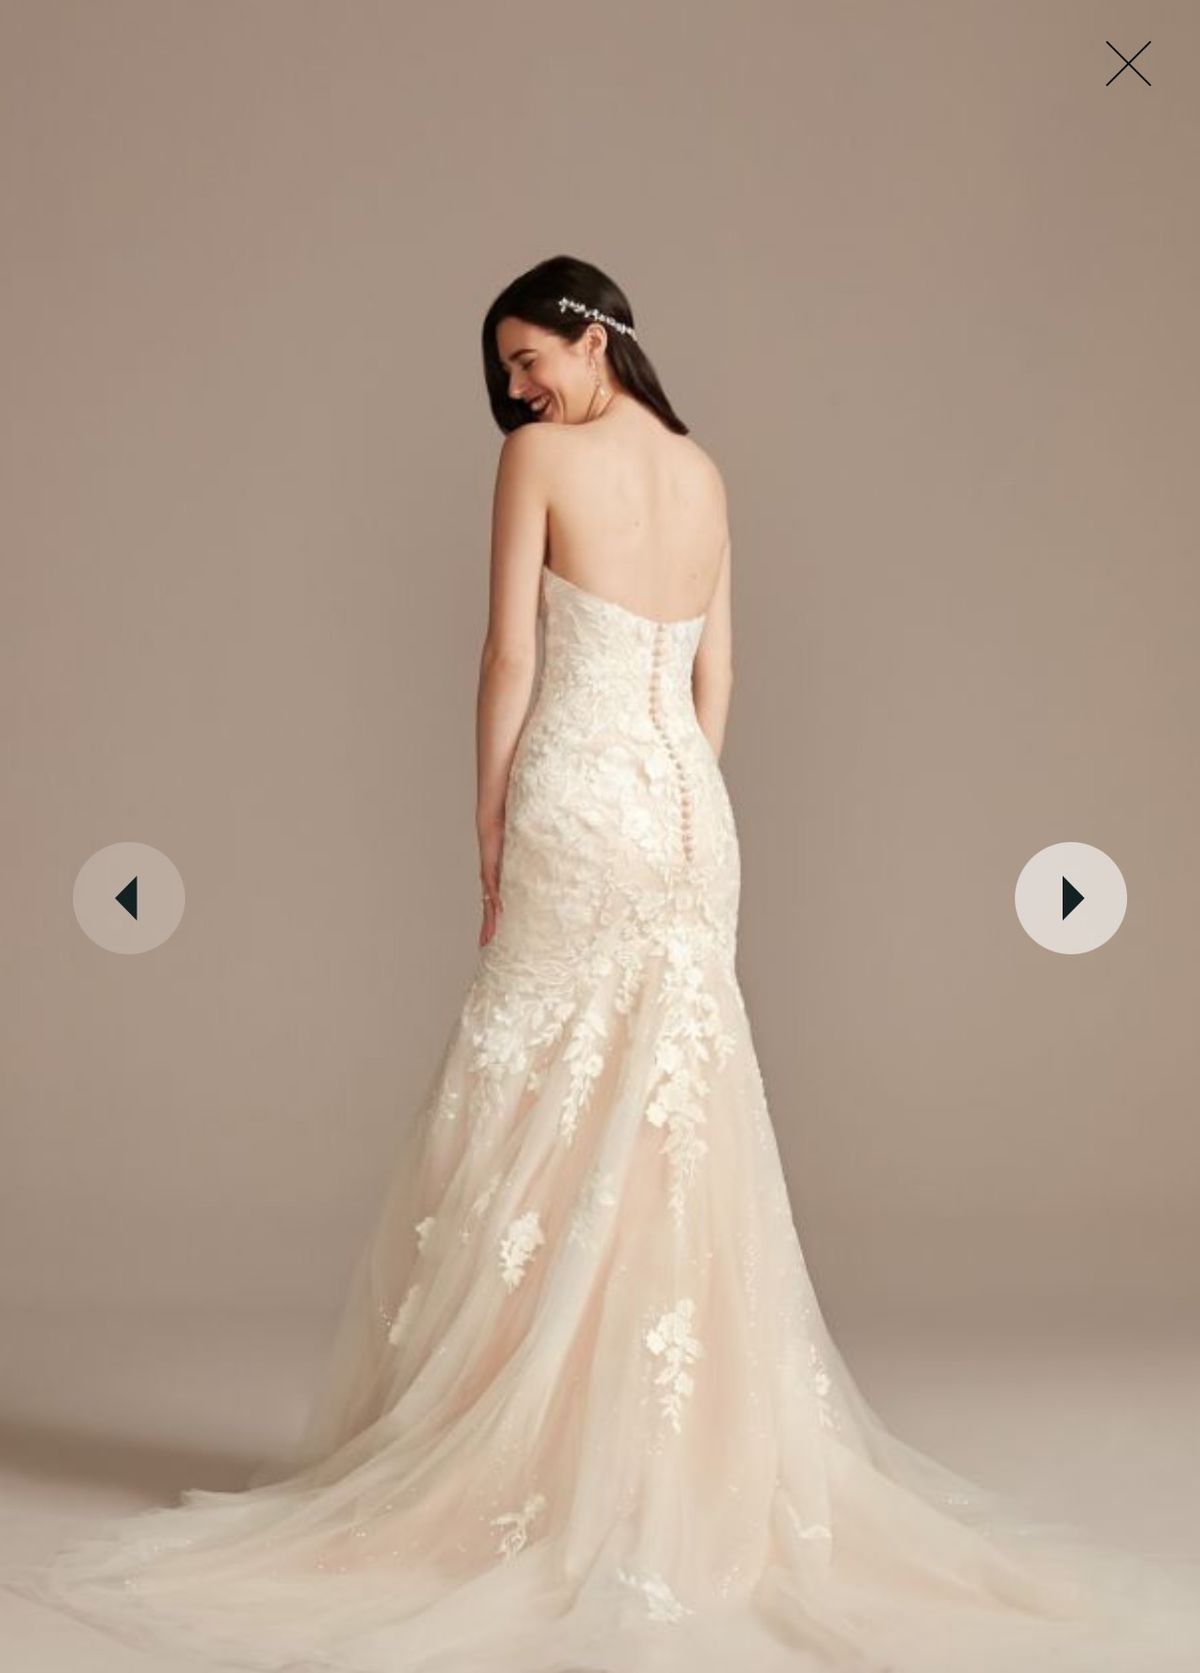 Plus Size 16 Wedding Strapless White Mermaid Dress on Queenly